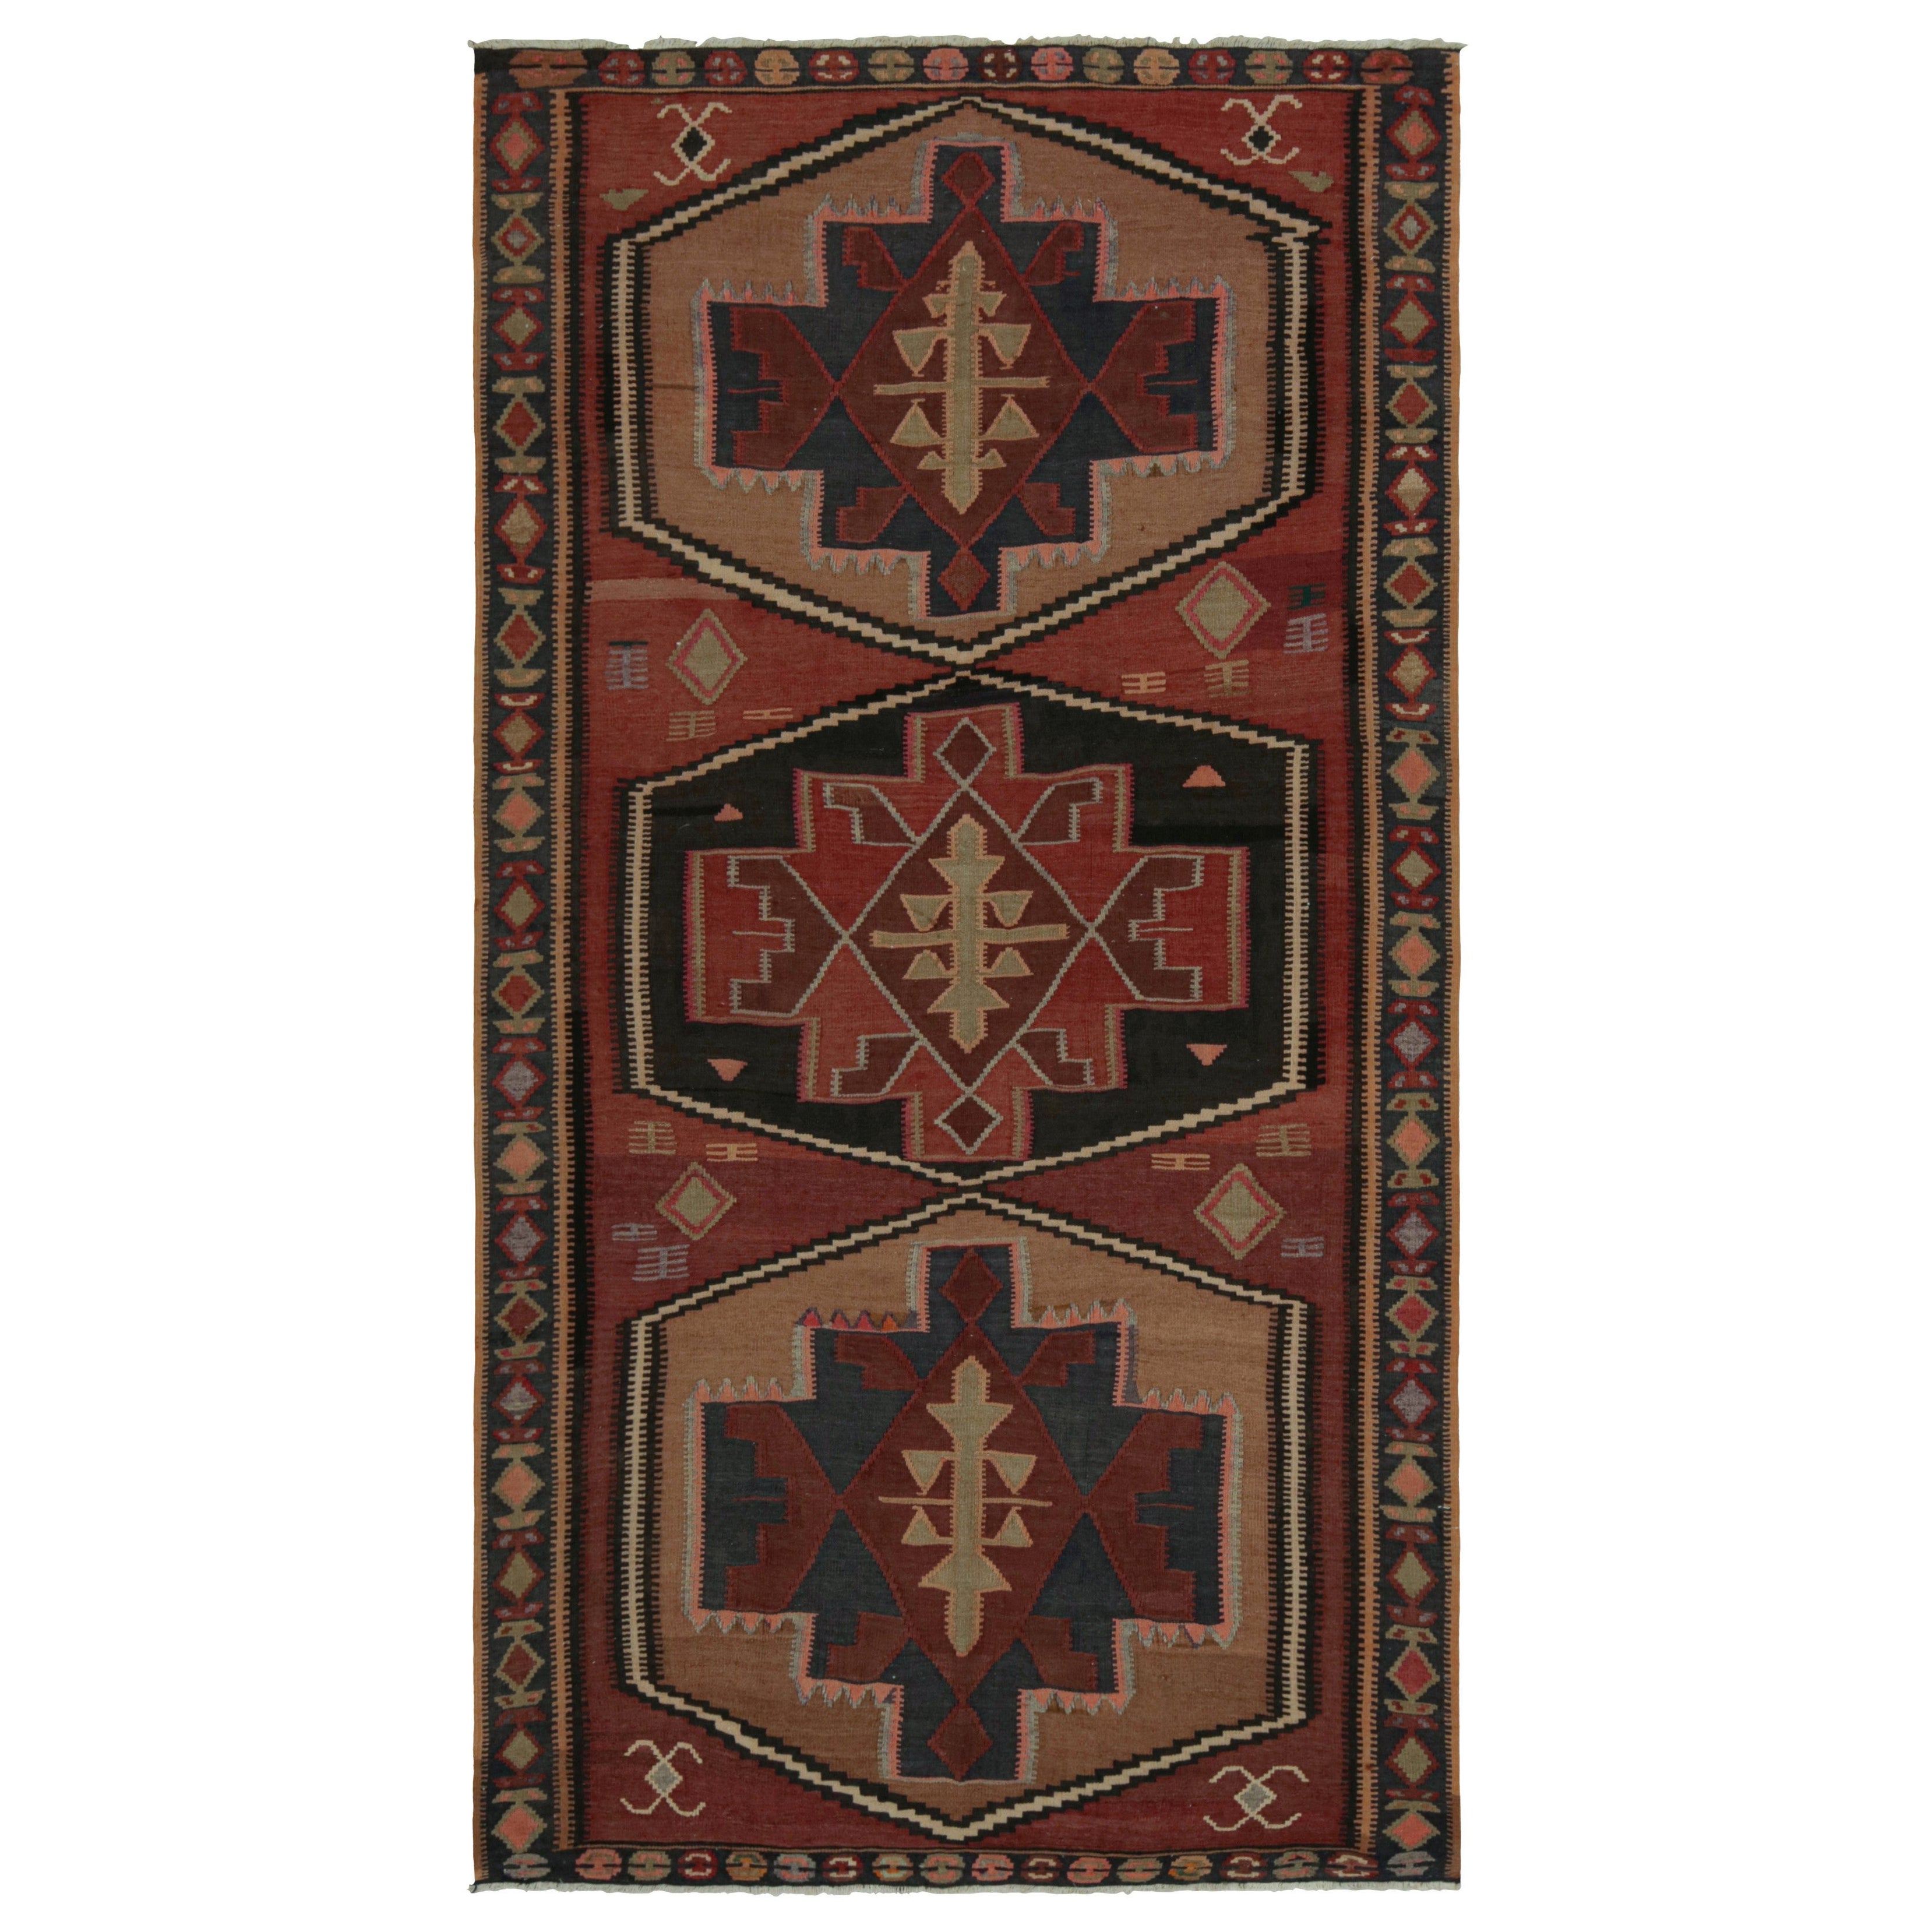 Vintage tribal Afghan Kilim rug in Red, with Medallions, from Rug & Kilim